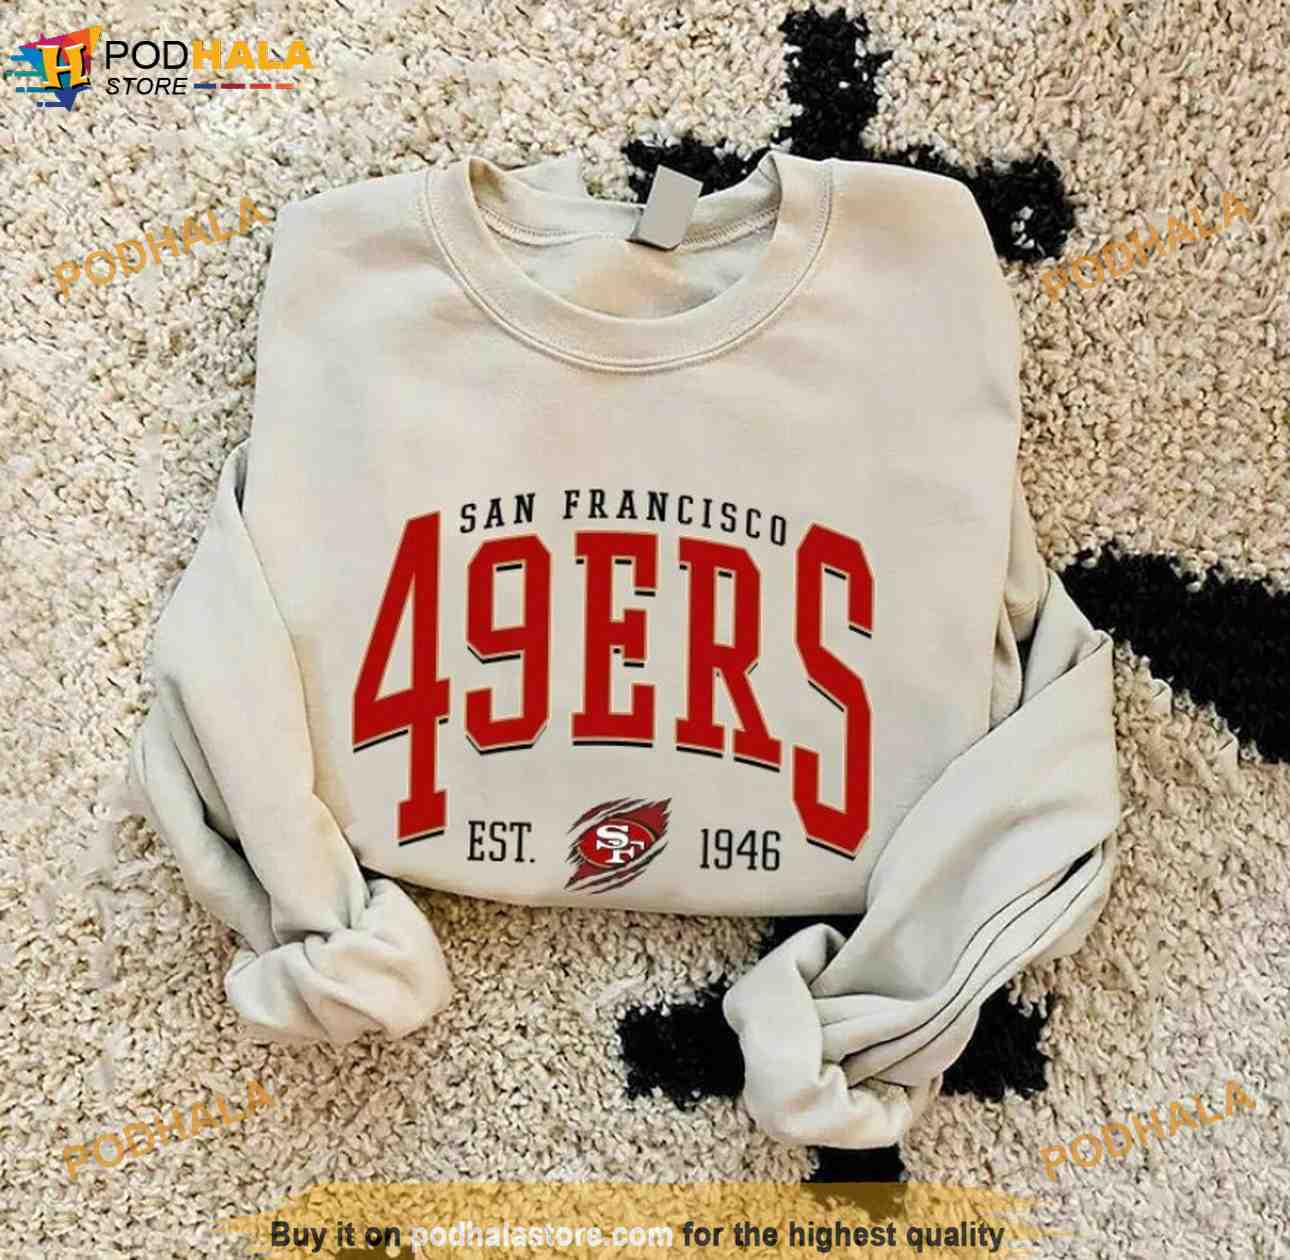 Vintage Style San Francisco Football Sweatshirt, 49ers Shirt